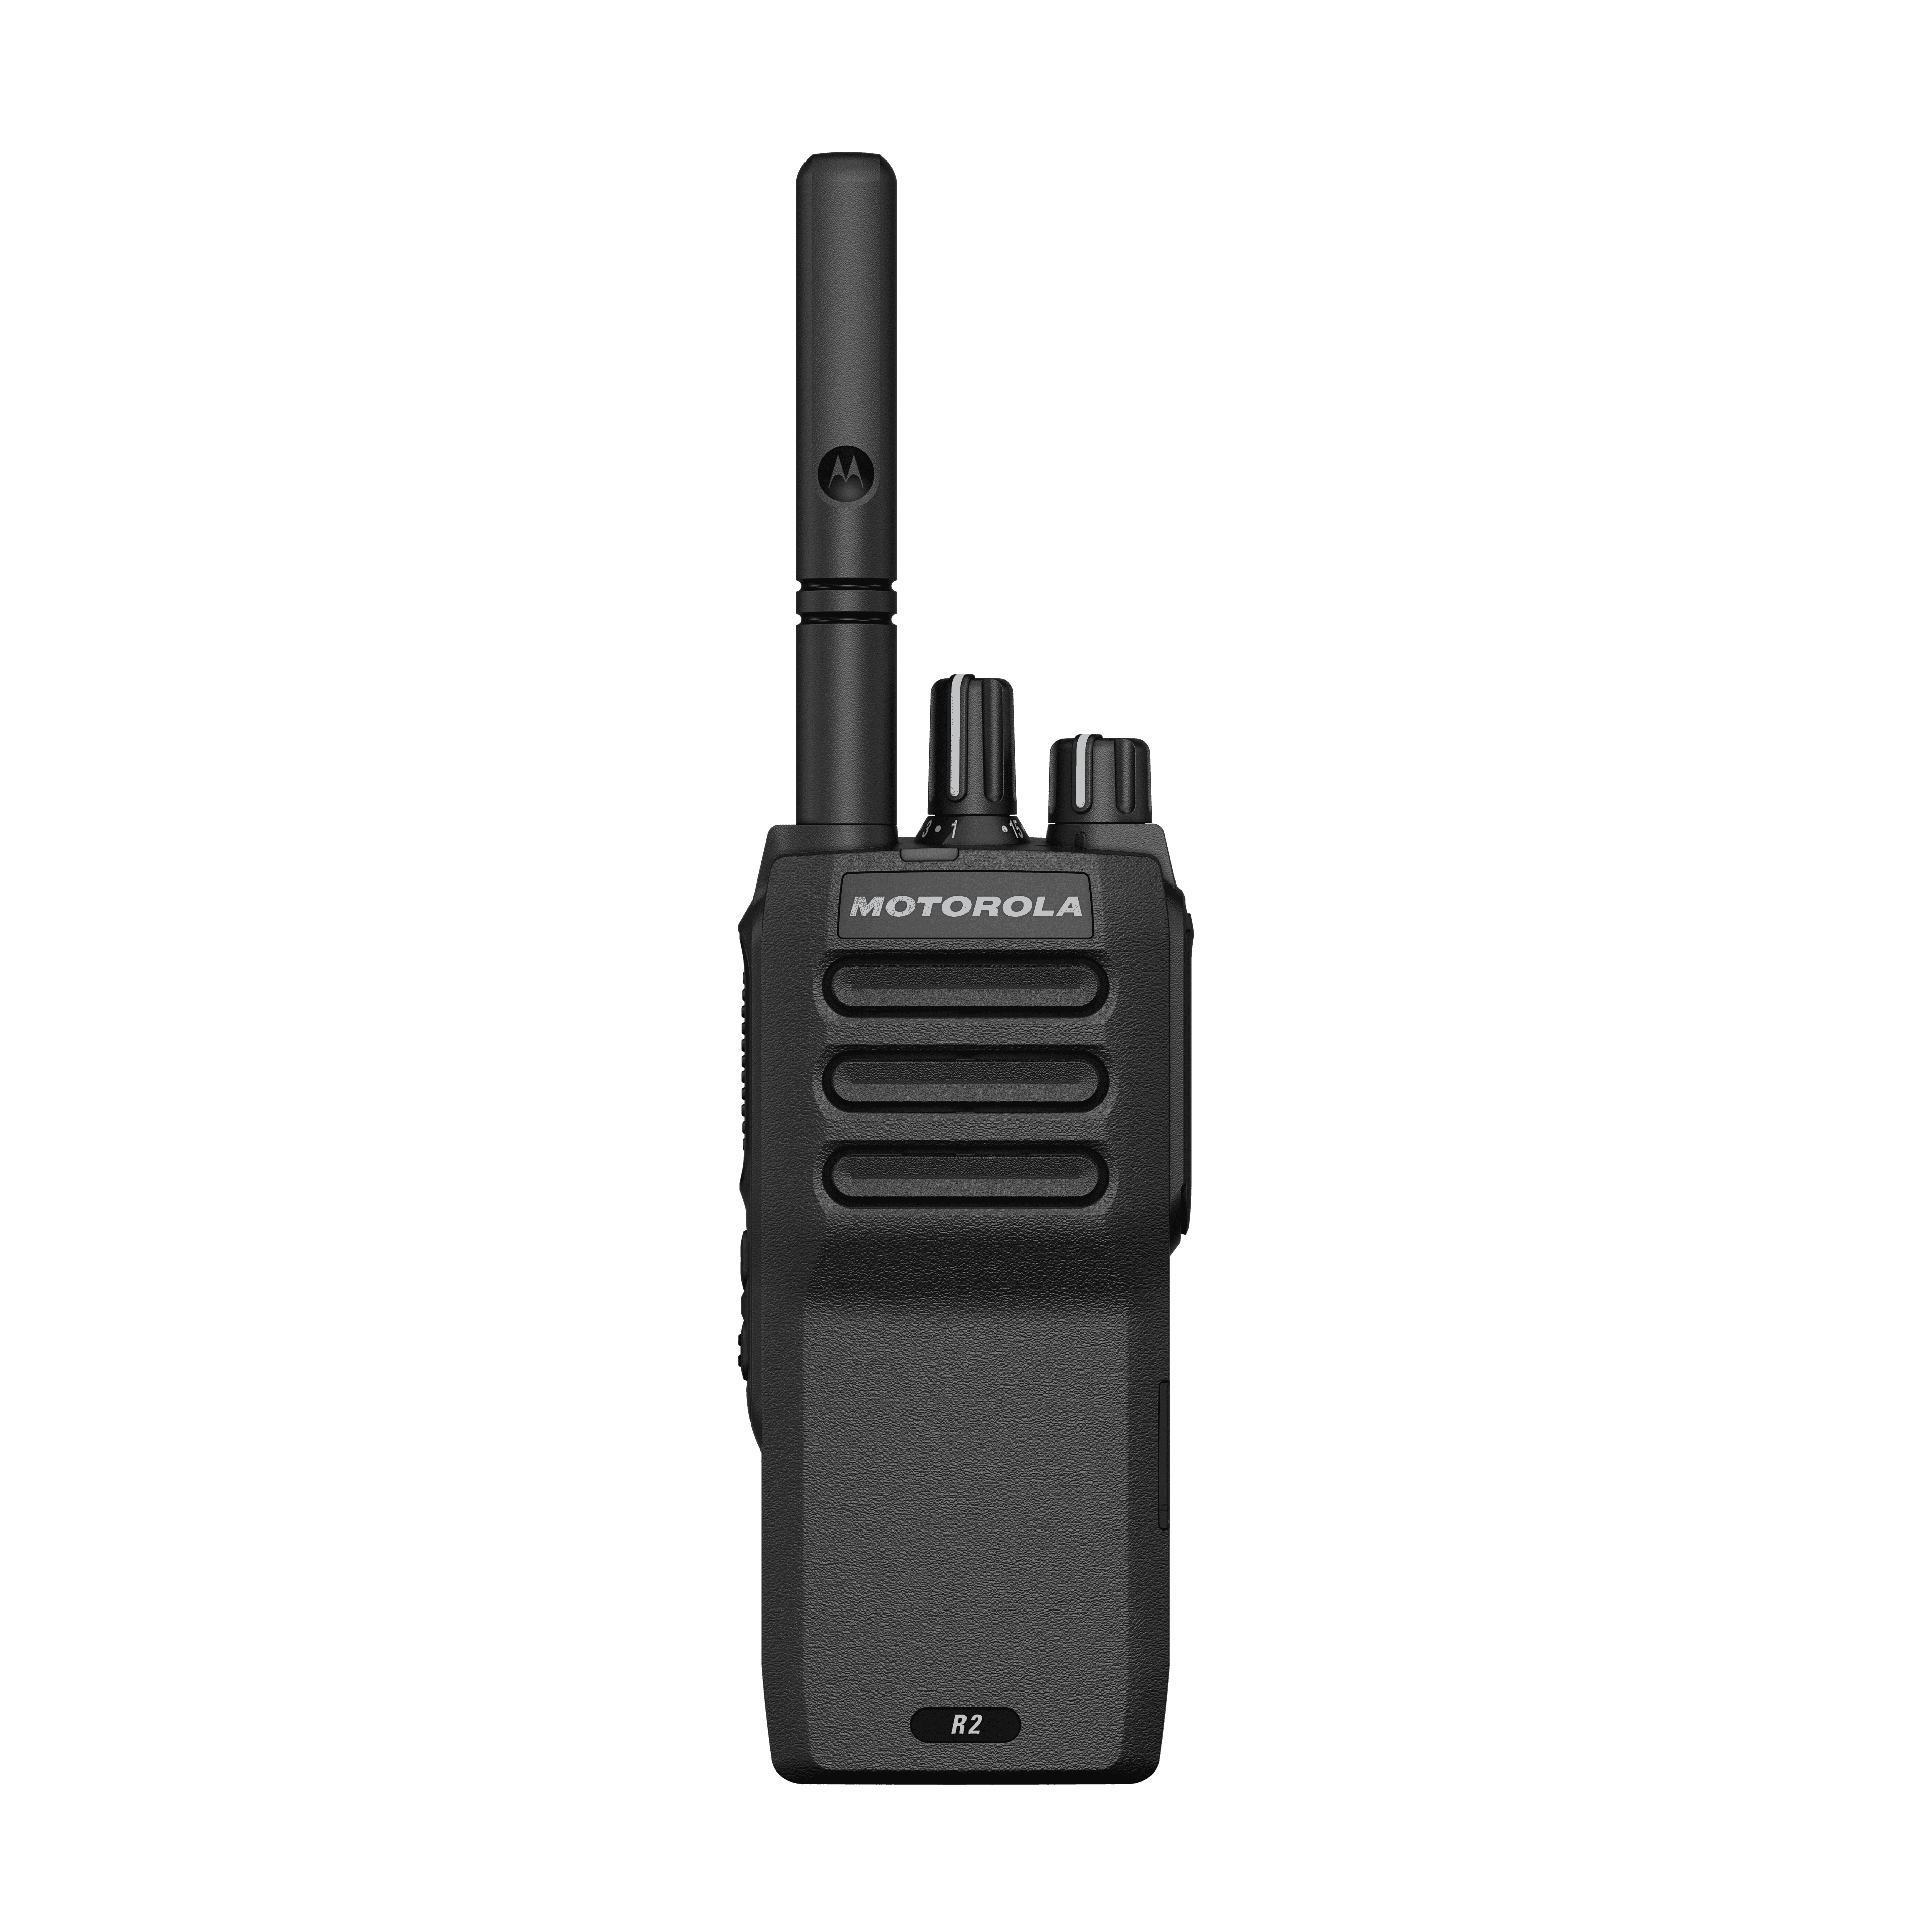 The MOTOTRBOTM R7 portable two-way radios